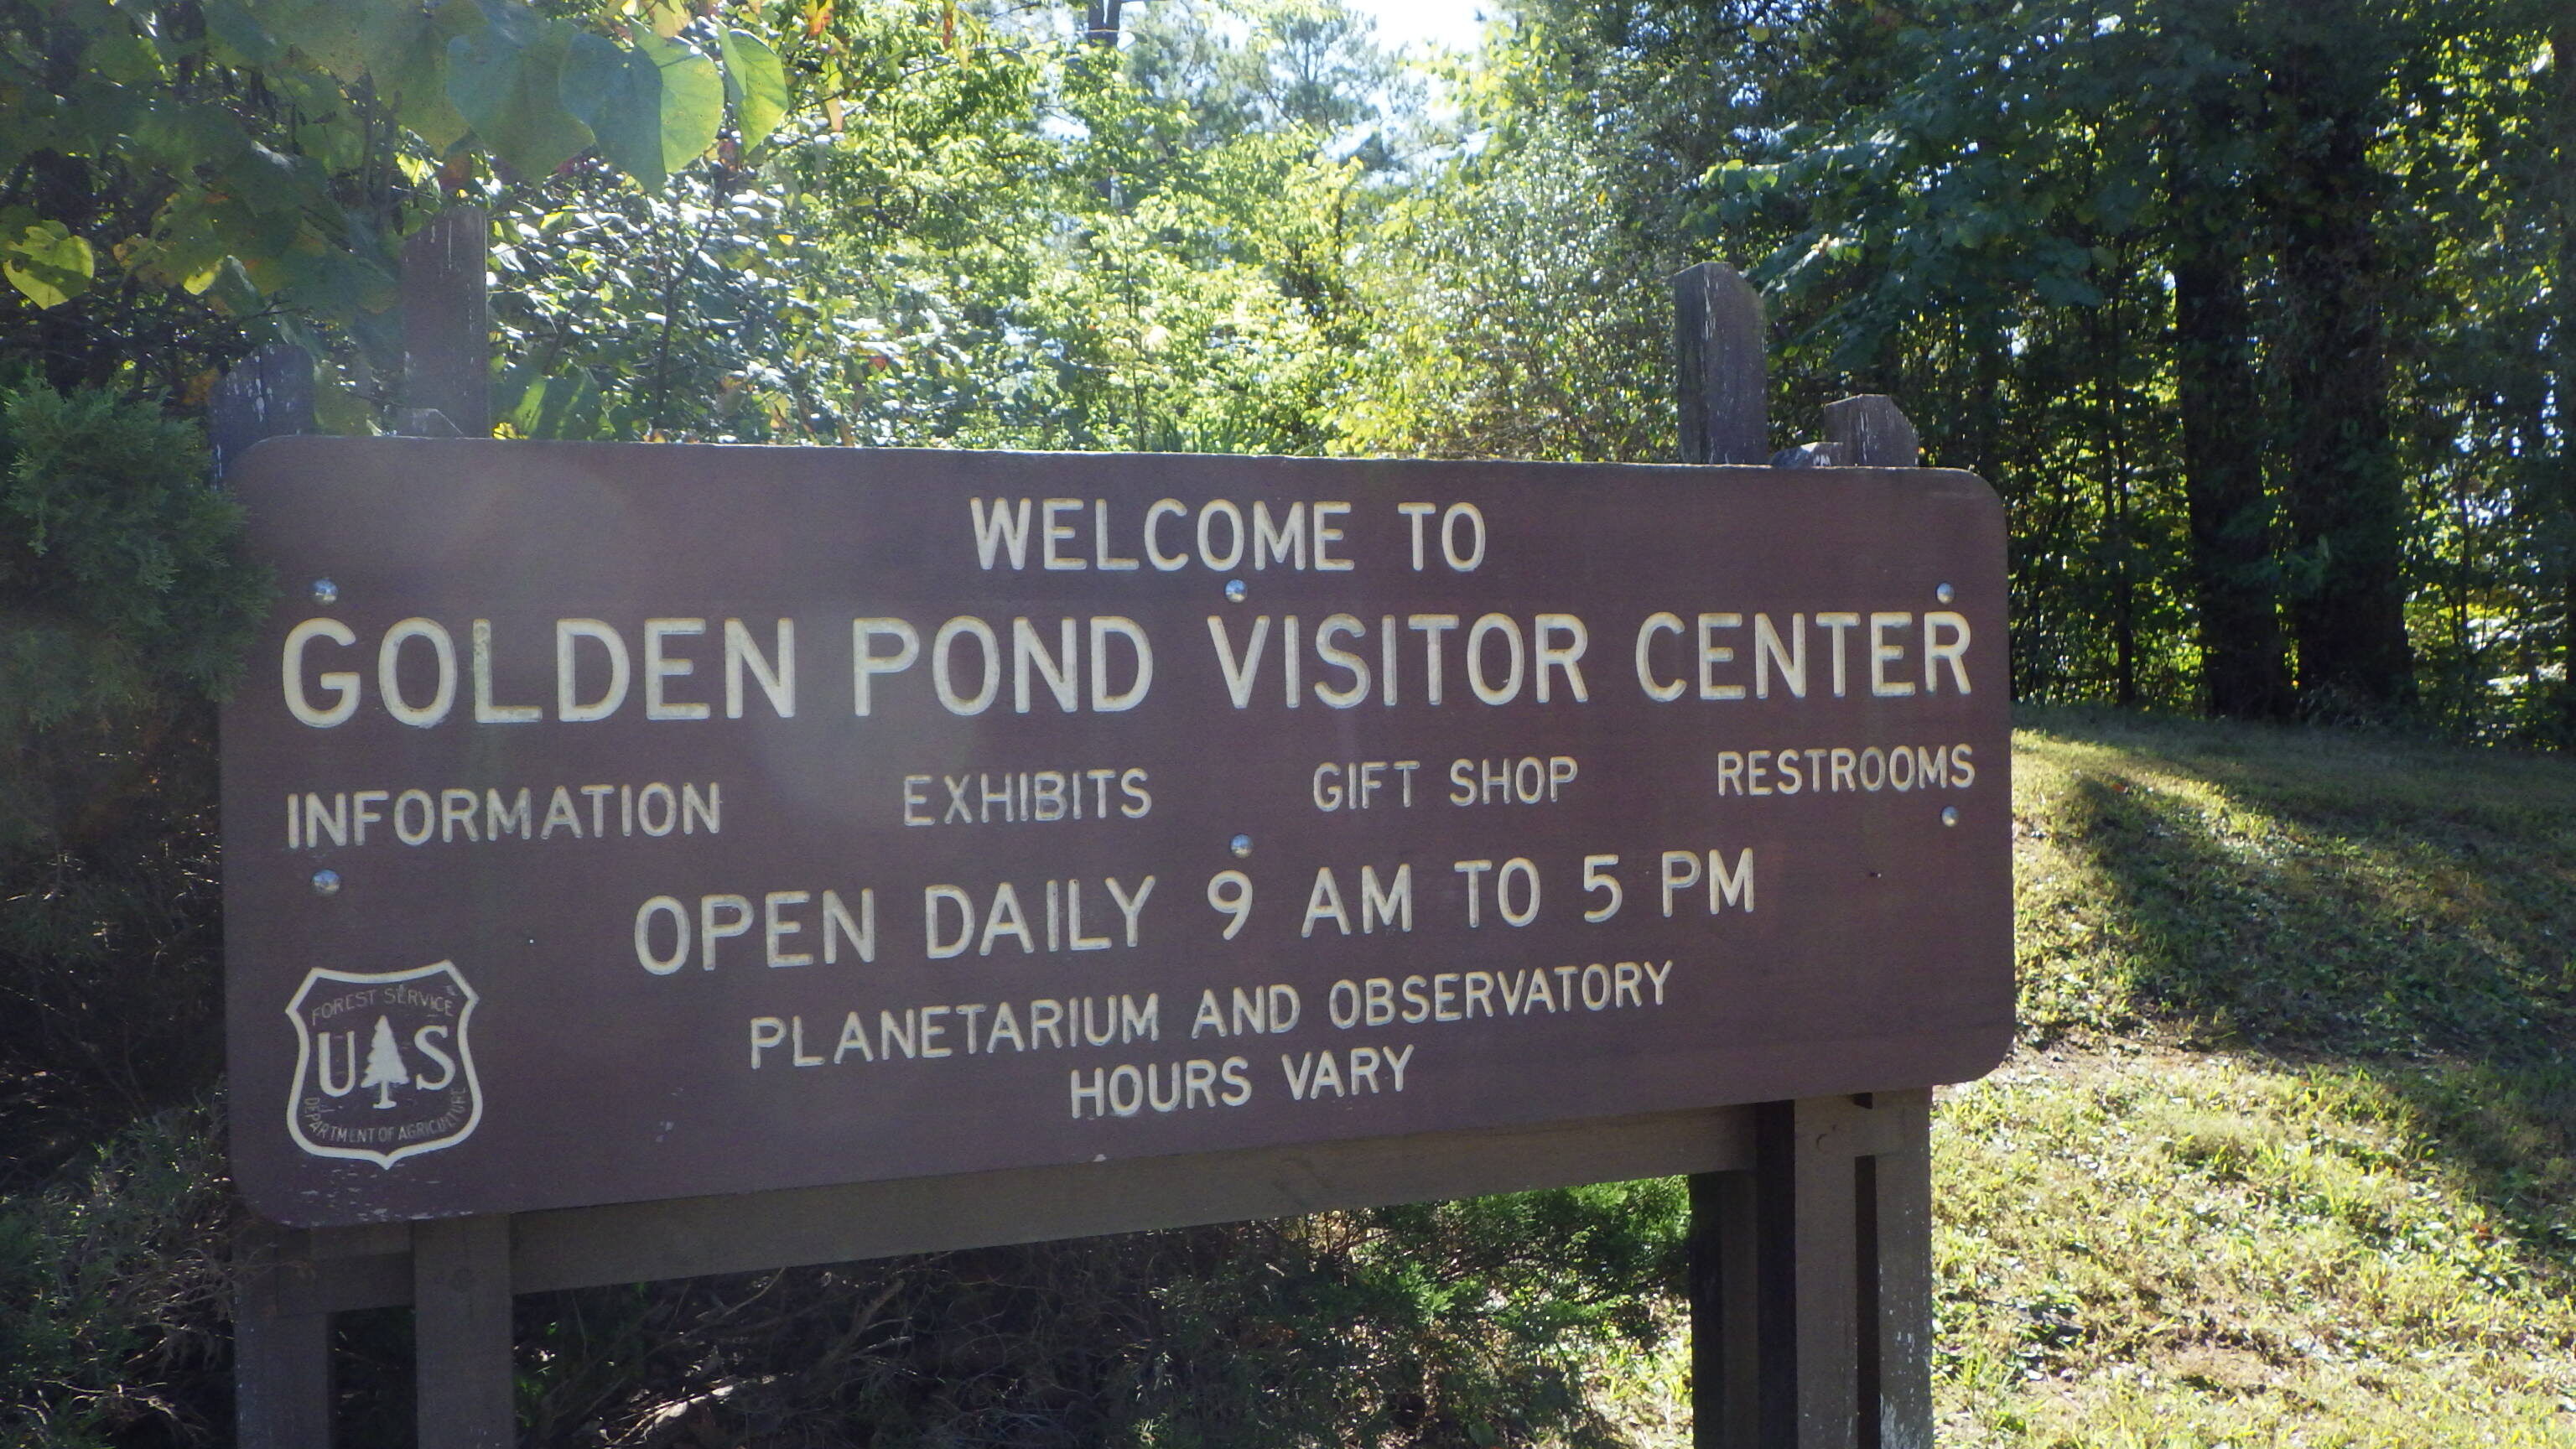 The Golden Pond Visitor Center